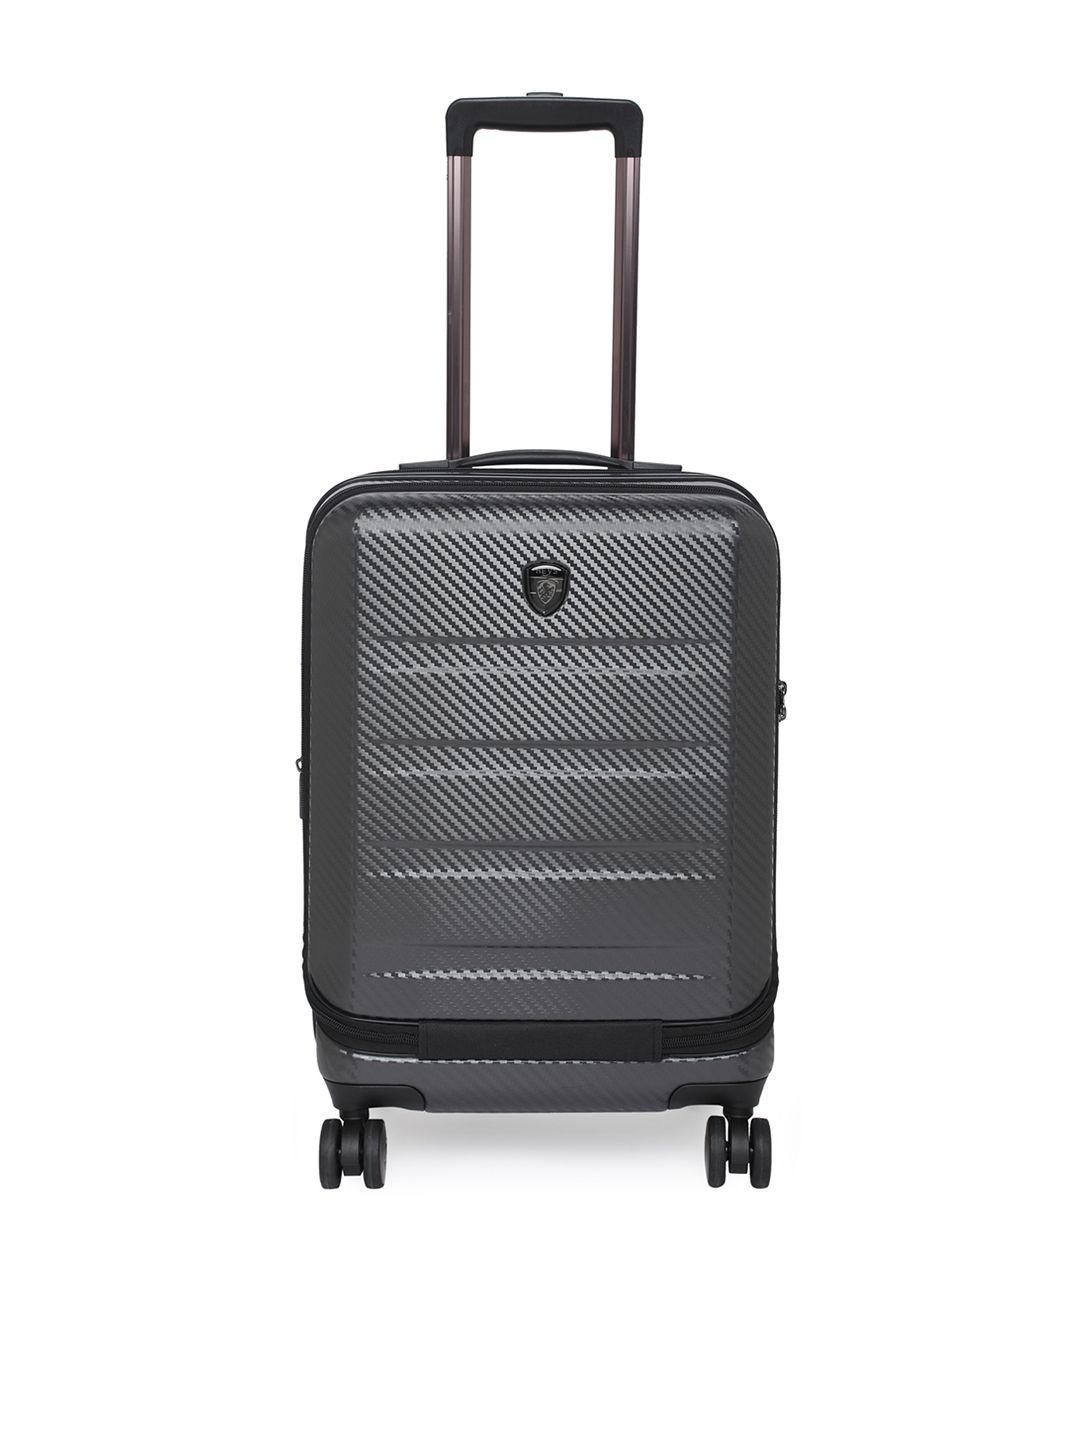 heys unisex charcoal hard case luggage 21" cabin size trolley bag